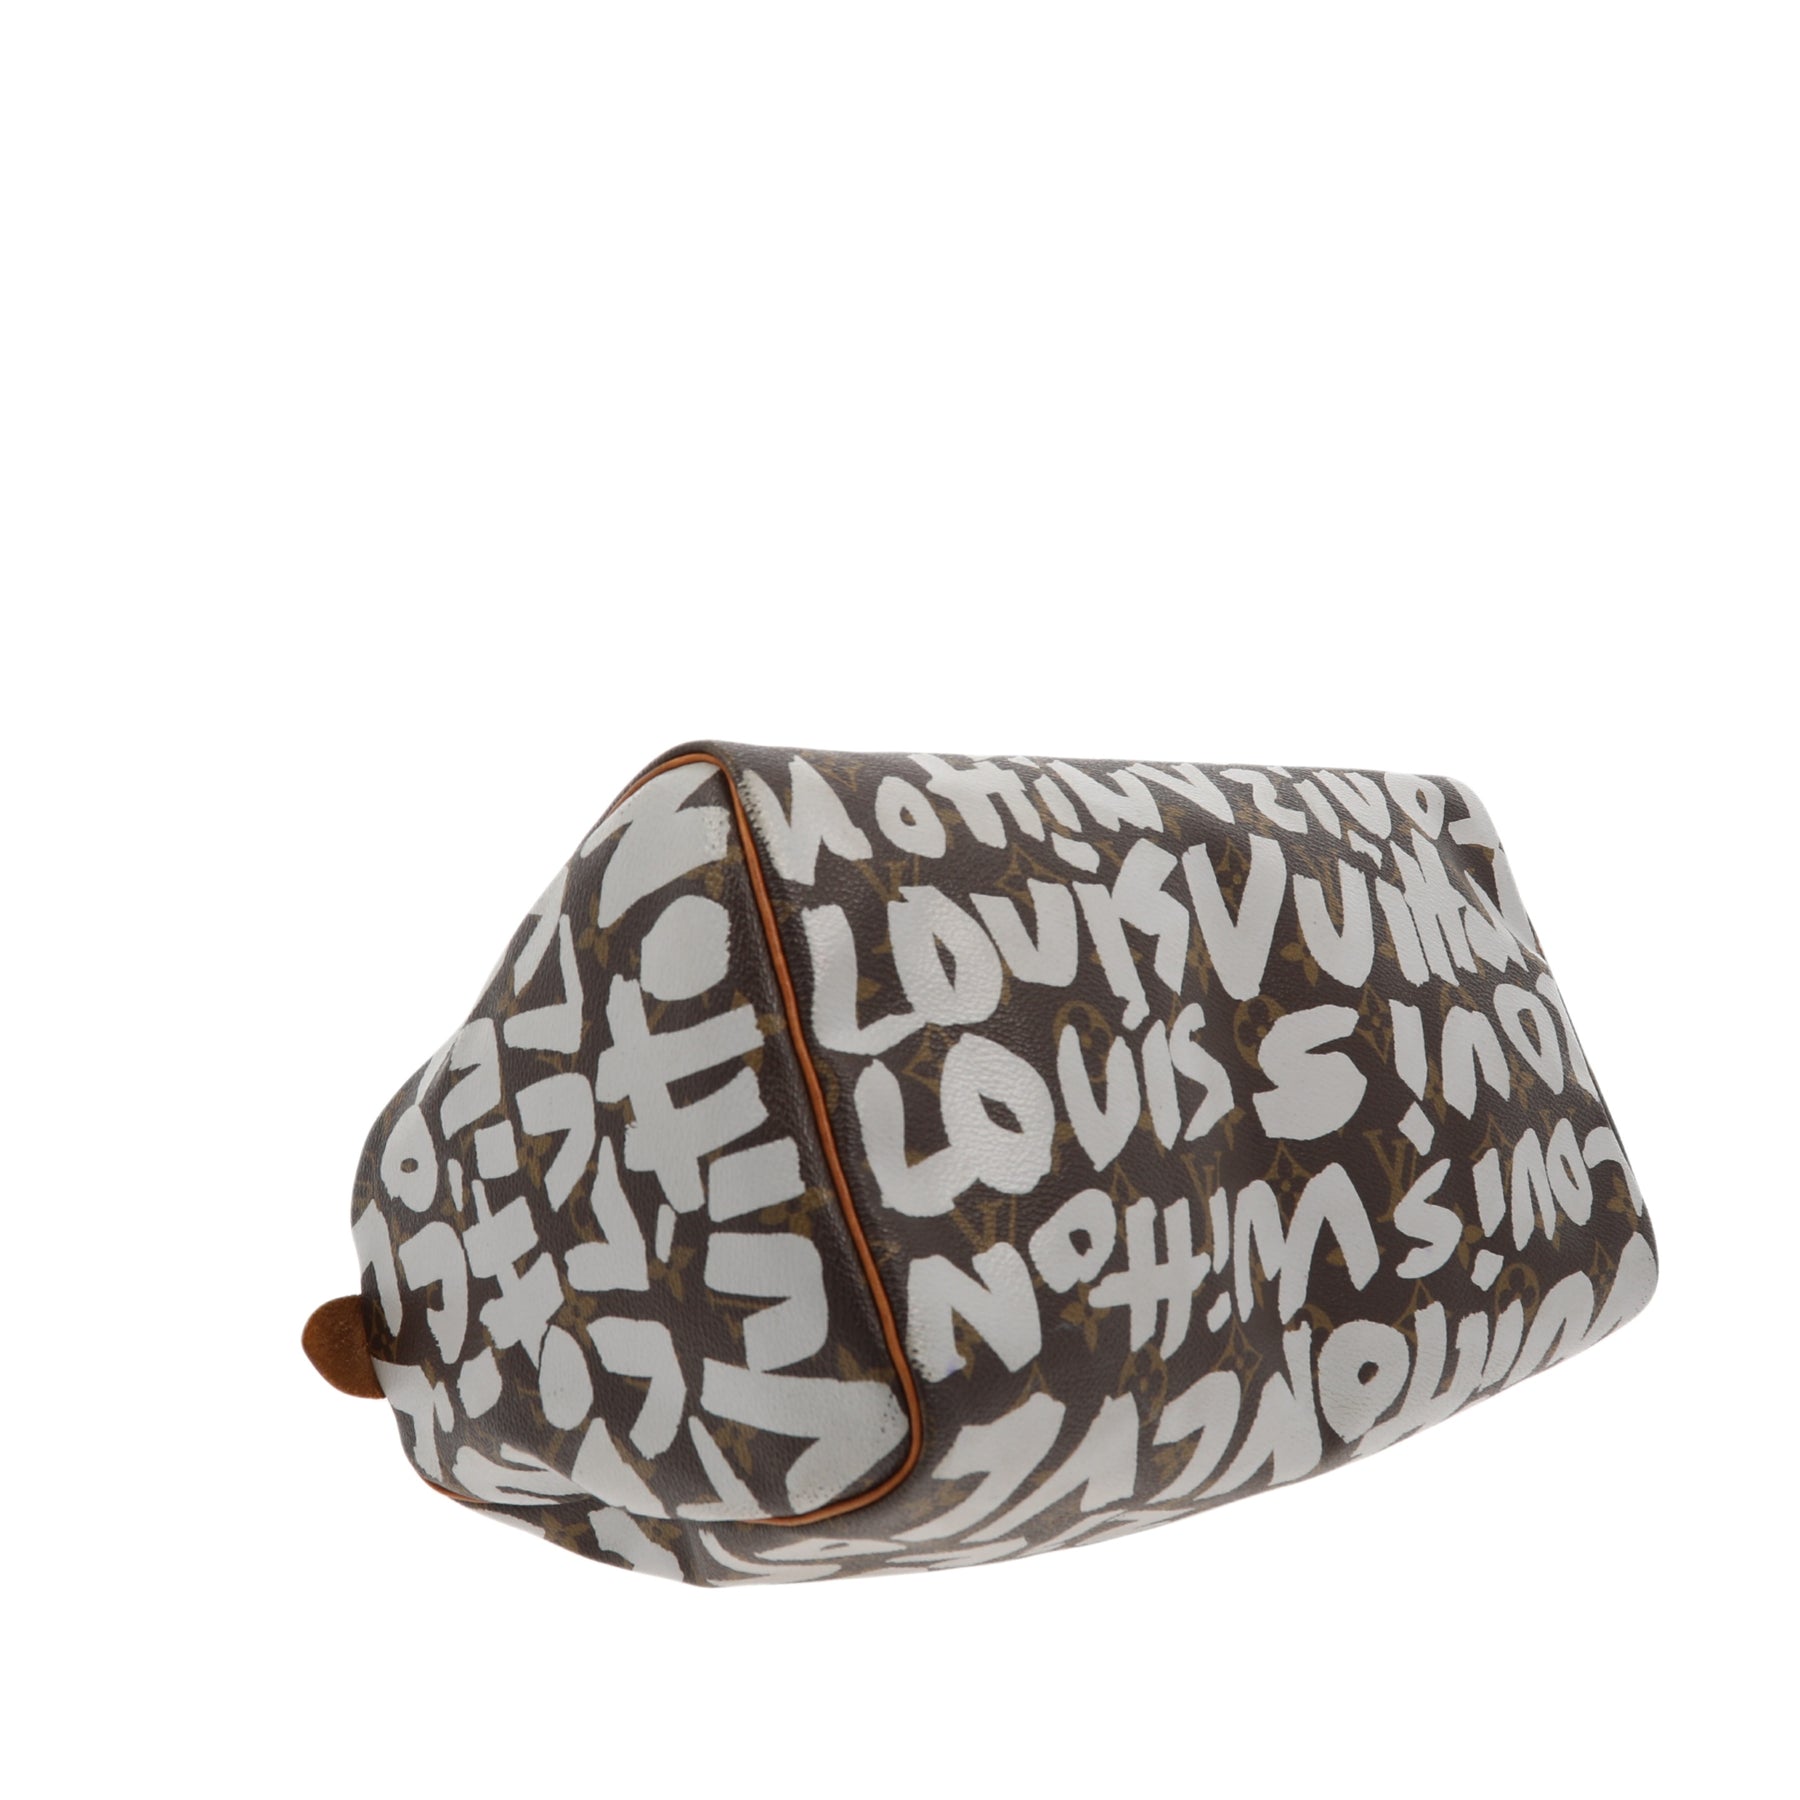 Louis Vuitton x Stephen Sprouse Limited Edition Graffiti Speedy